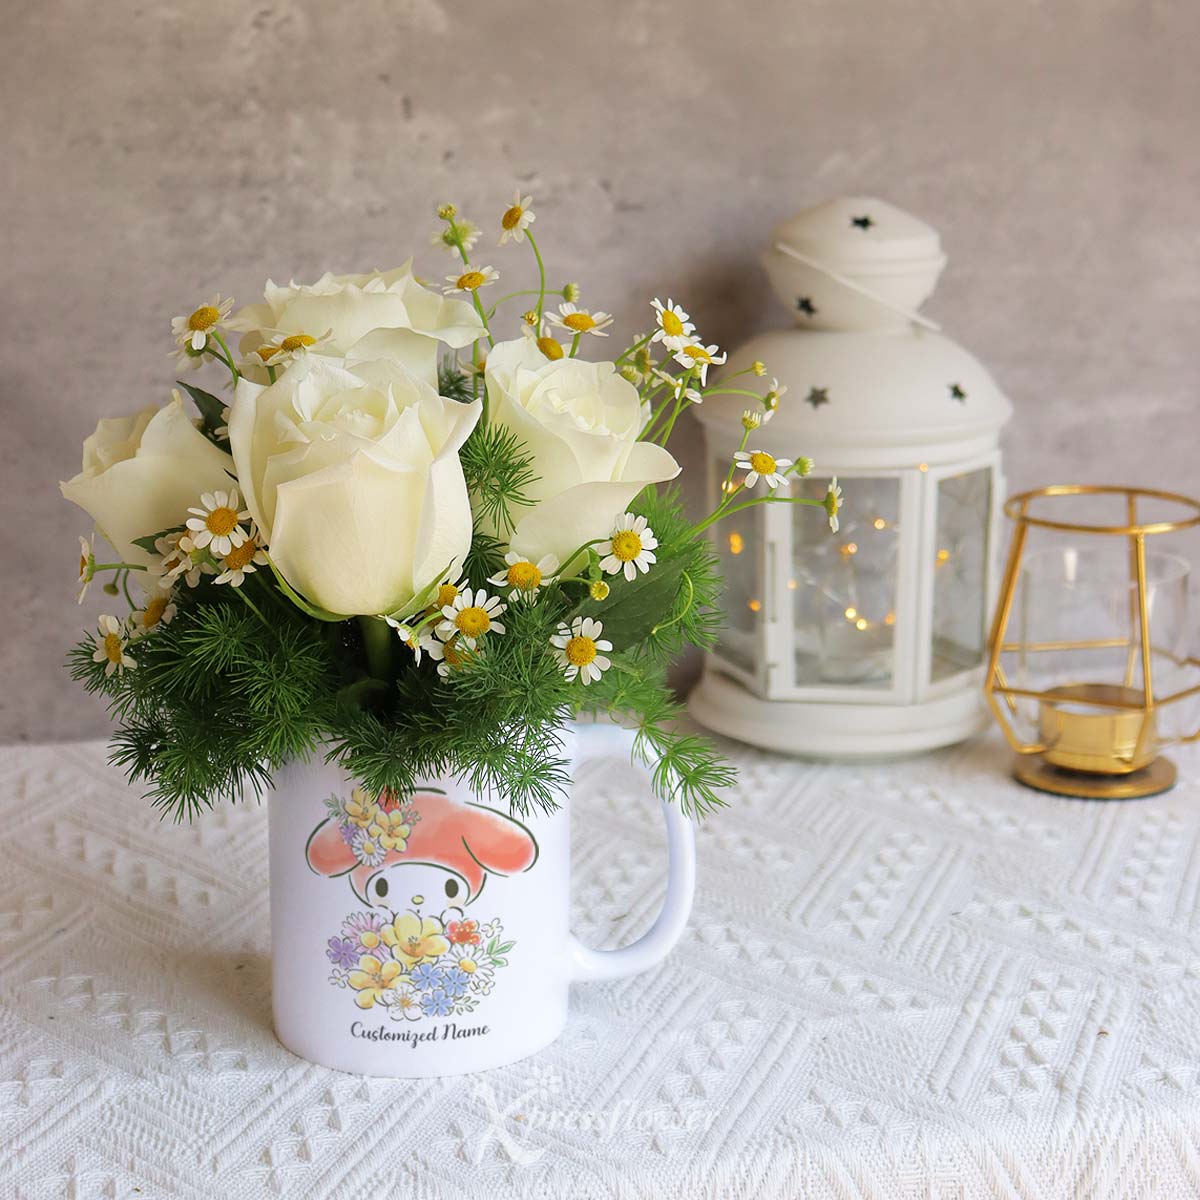 SNMG2310_Aquarius Blooms 6 White Roses with My Melody Personalised Mug Aquarius 3a